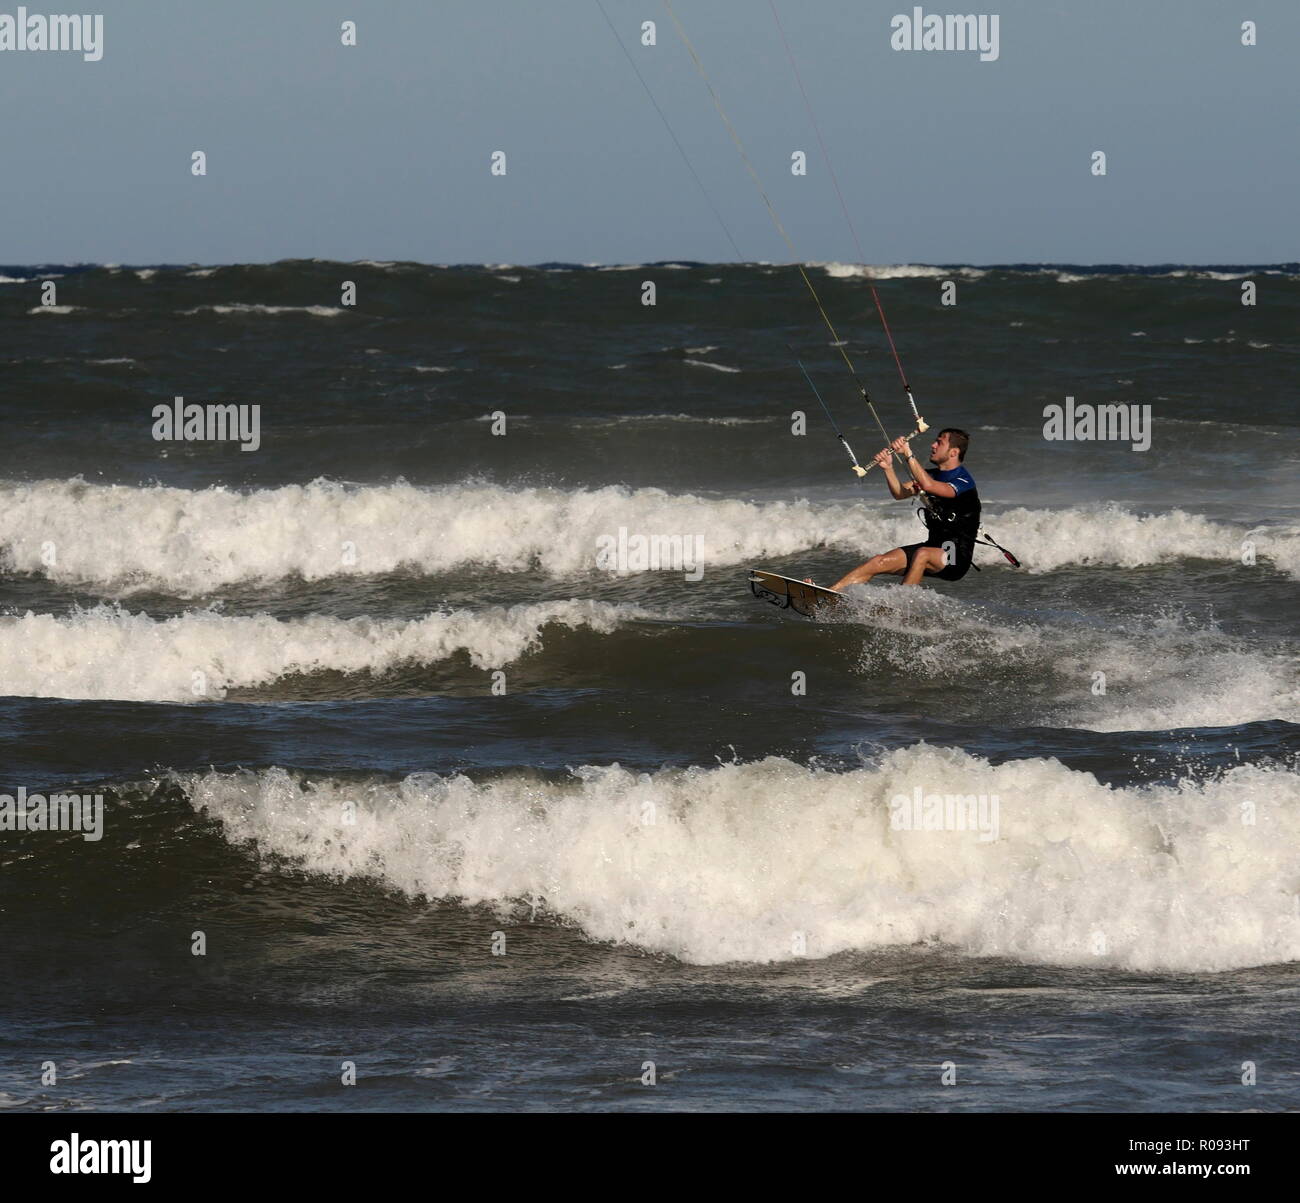 AJAXNETPHOTO. CANNES, Francia. - KITE SURFERS godendo una brezza leggera E SURF A PALM BEACH surf spot. Foto:JONATHAN EASTLAND/AJAX REF:GX8 182509 627 Foto Stock